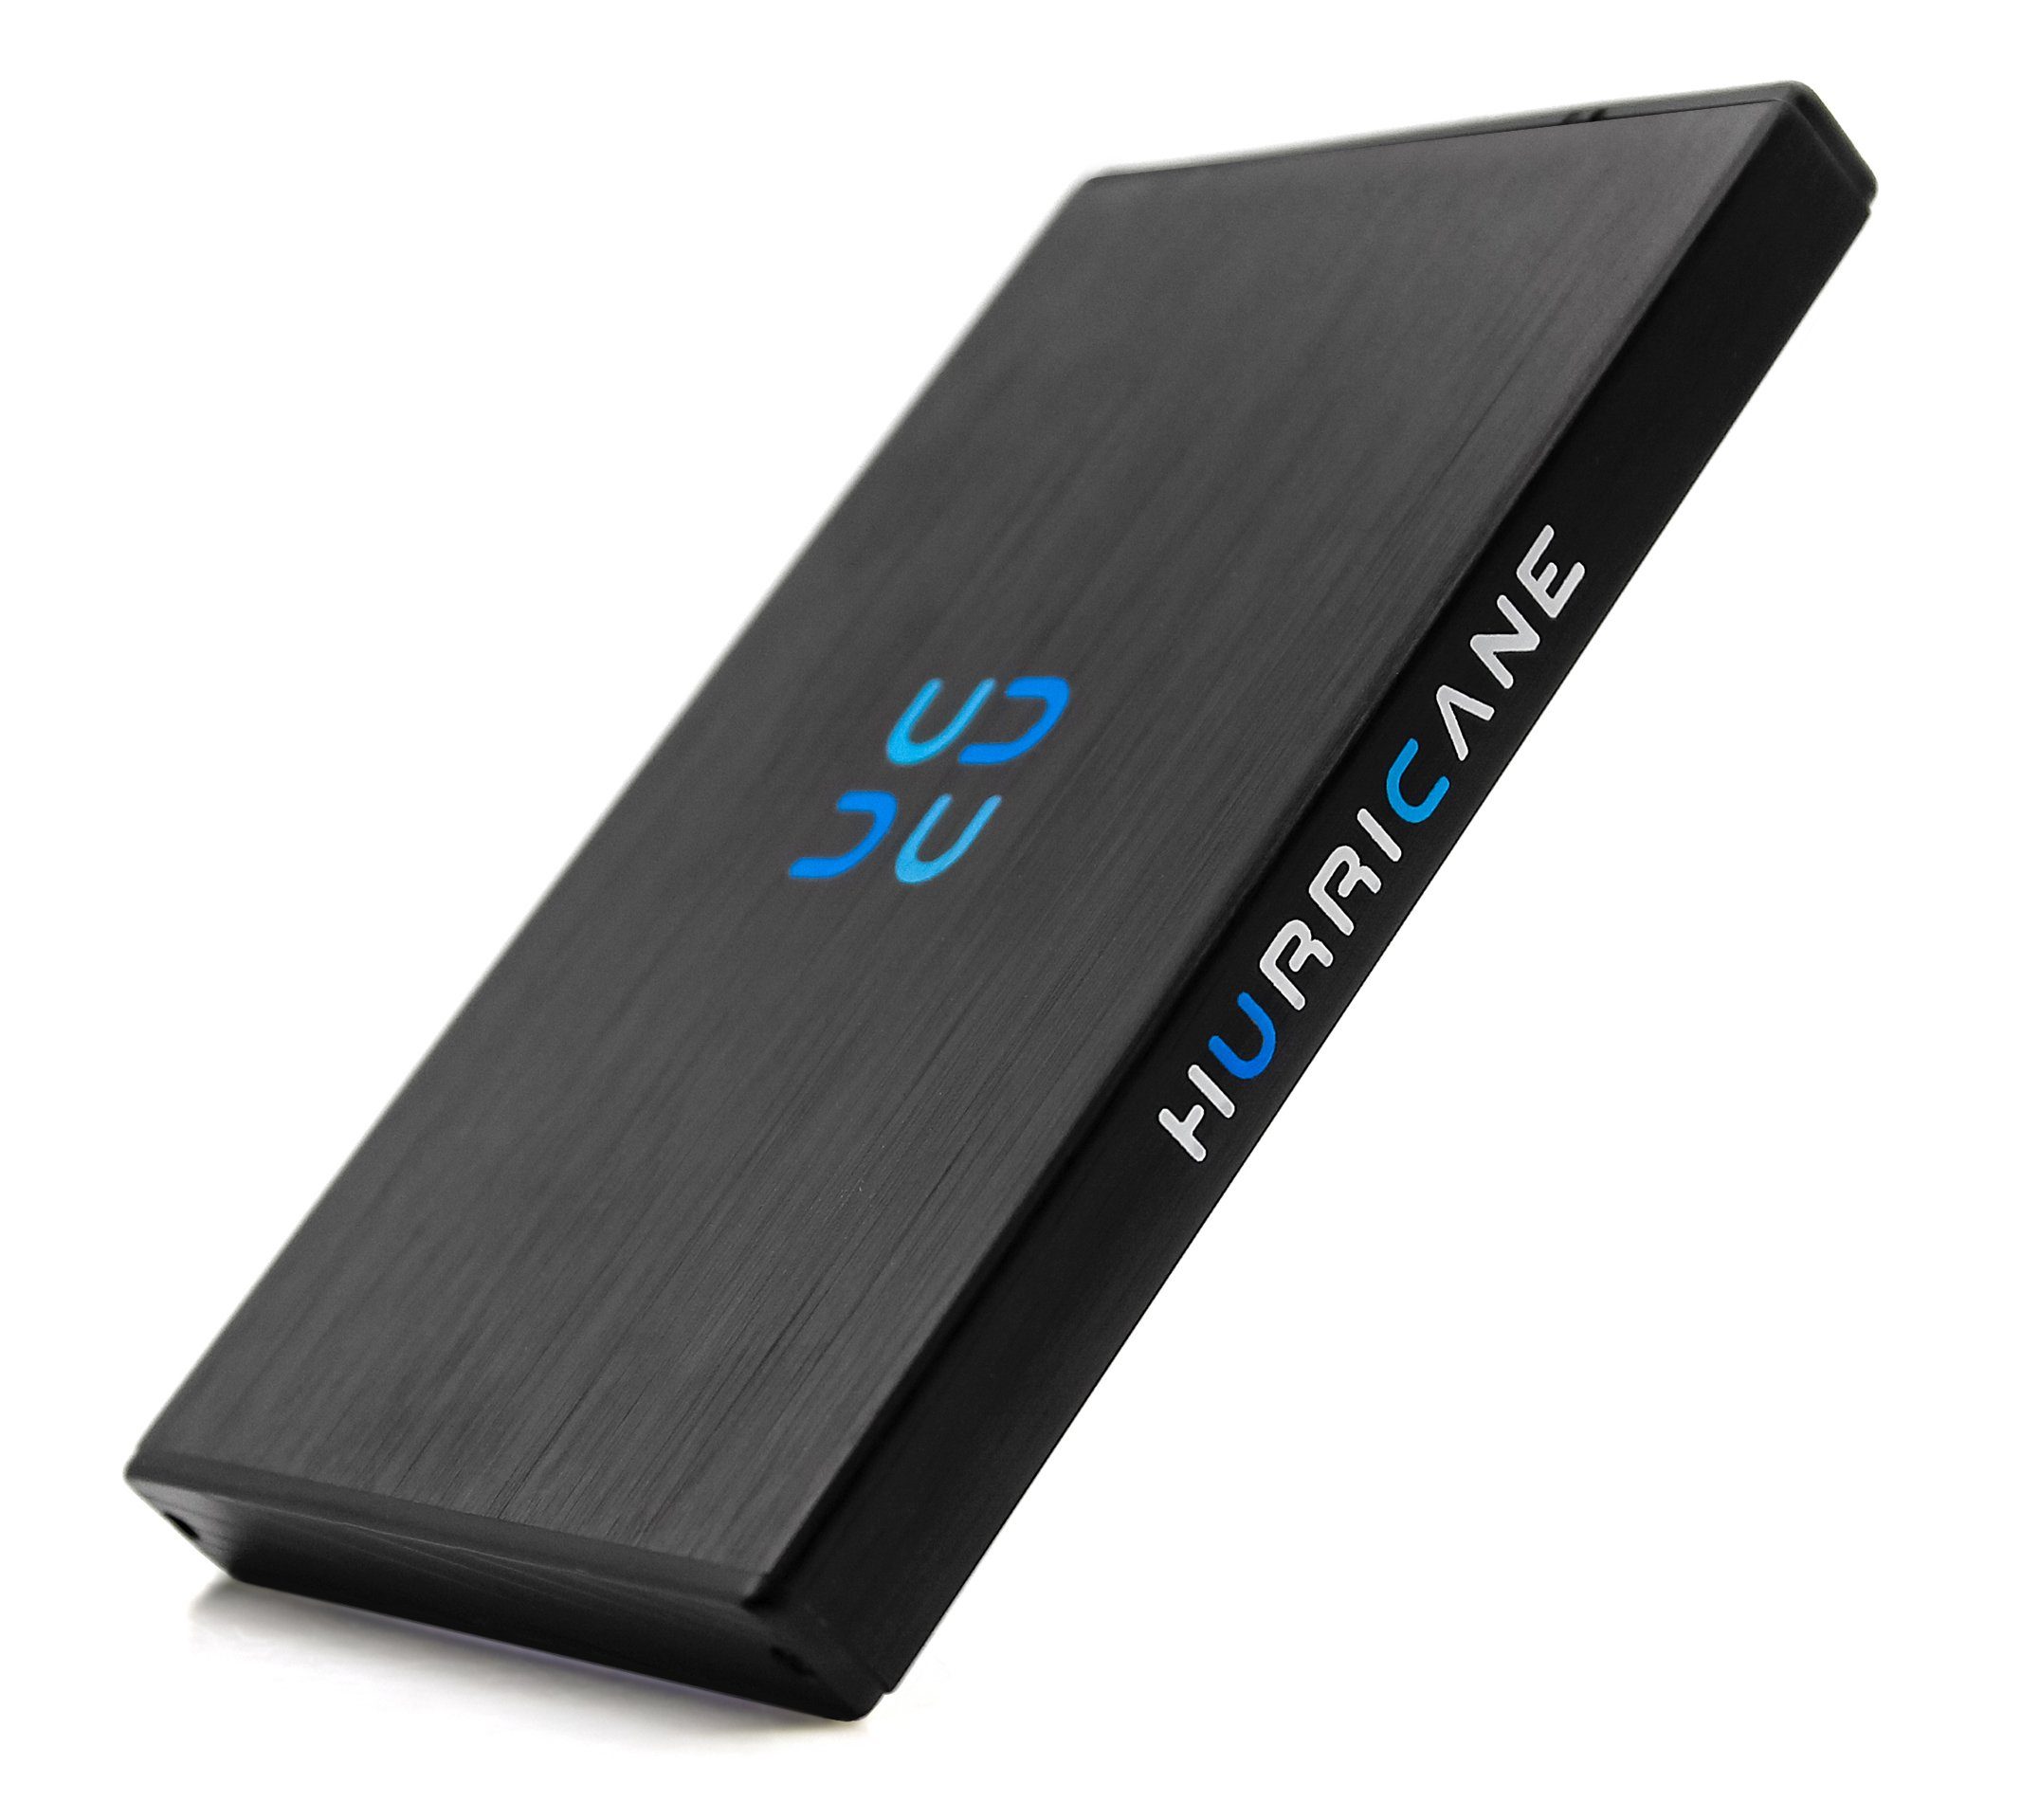 HURRICANE GD25612 Externe Festplatte 500GB 2,5" USB 3.0 Speicher externe HDD-Festplatte (500GB) 2,5"", für PC, Laptop, PS4, PS5, Xbox - kompatibel mit Windows, Mac, Linux